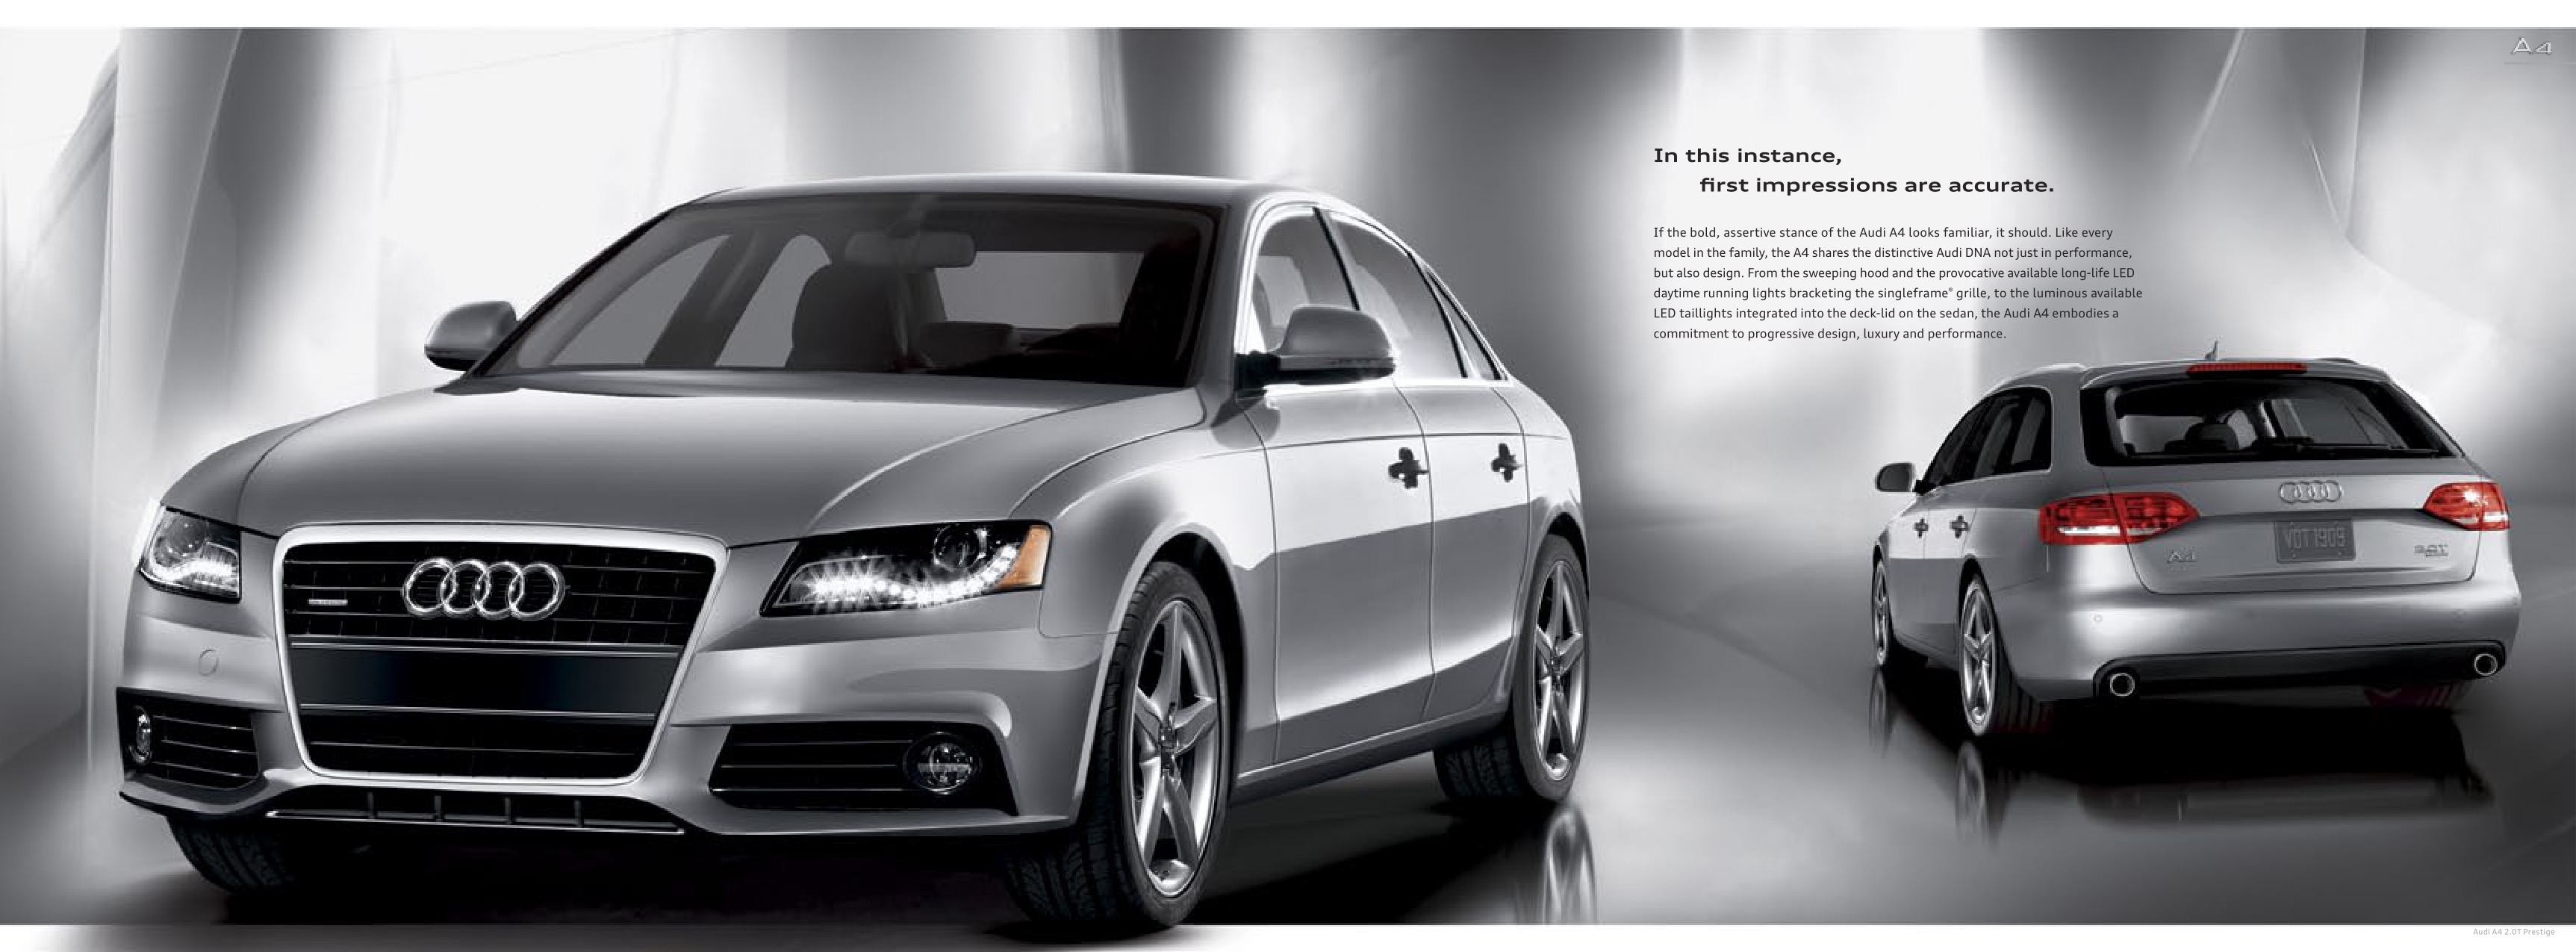 2010 Audi A4 Brochure Page 15